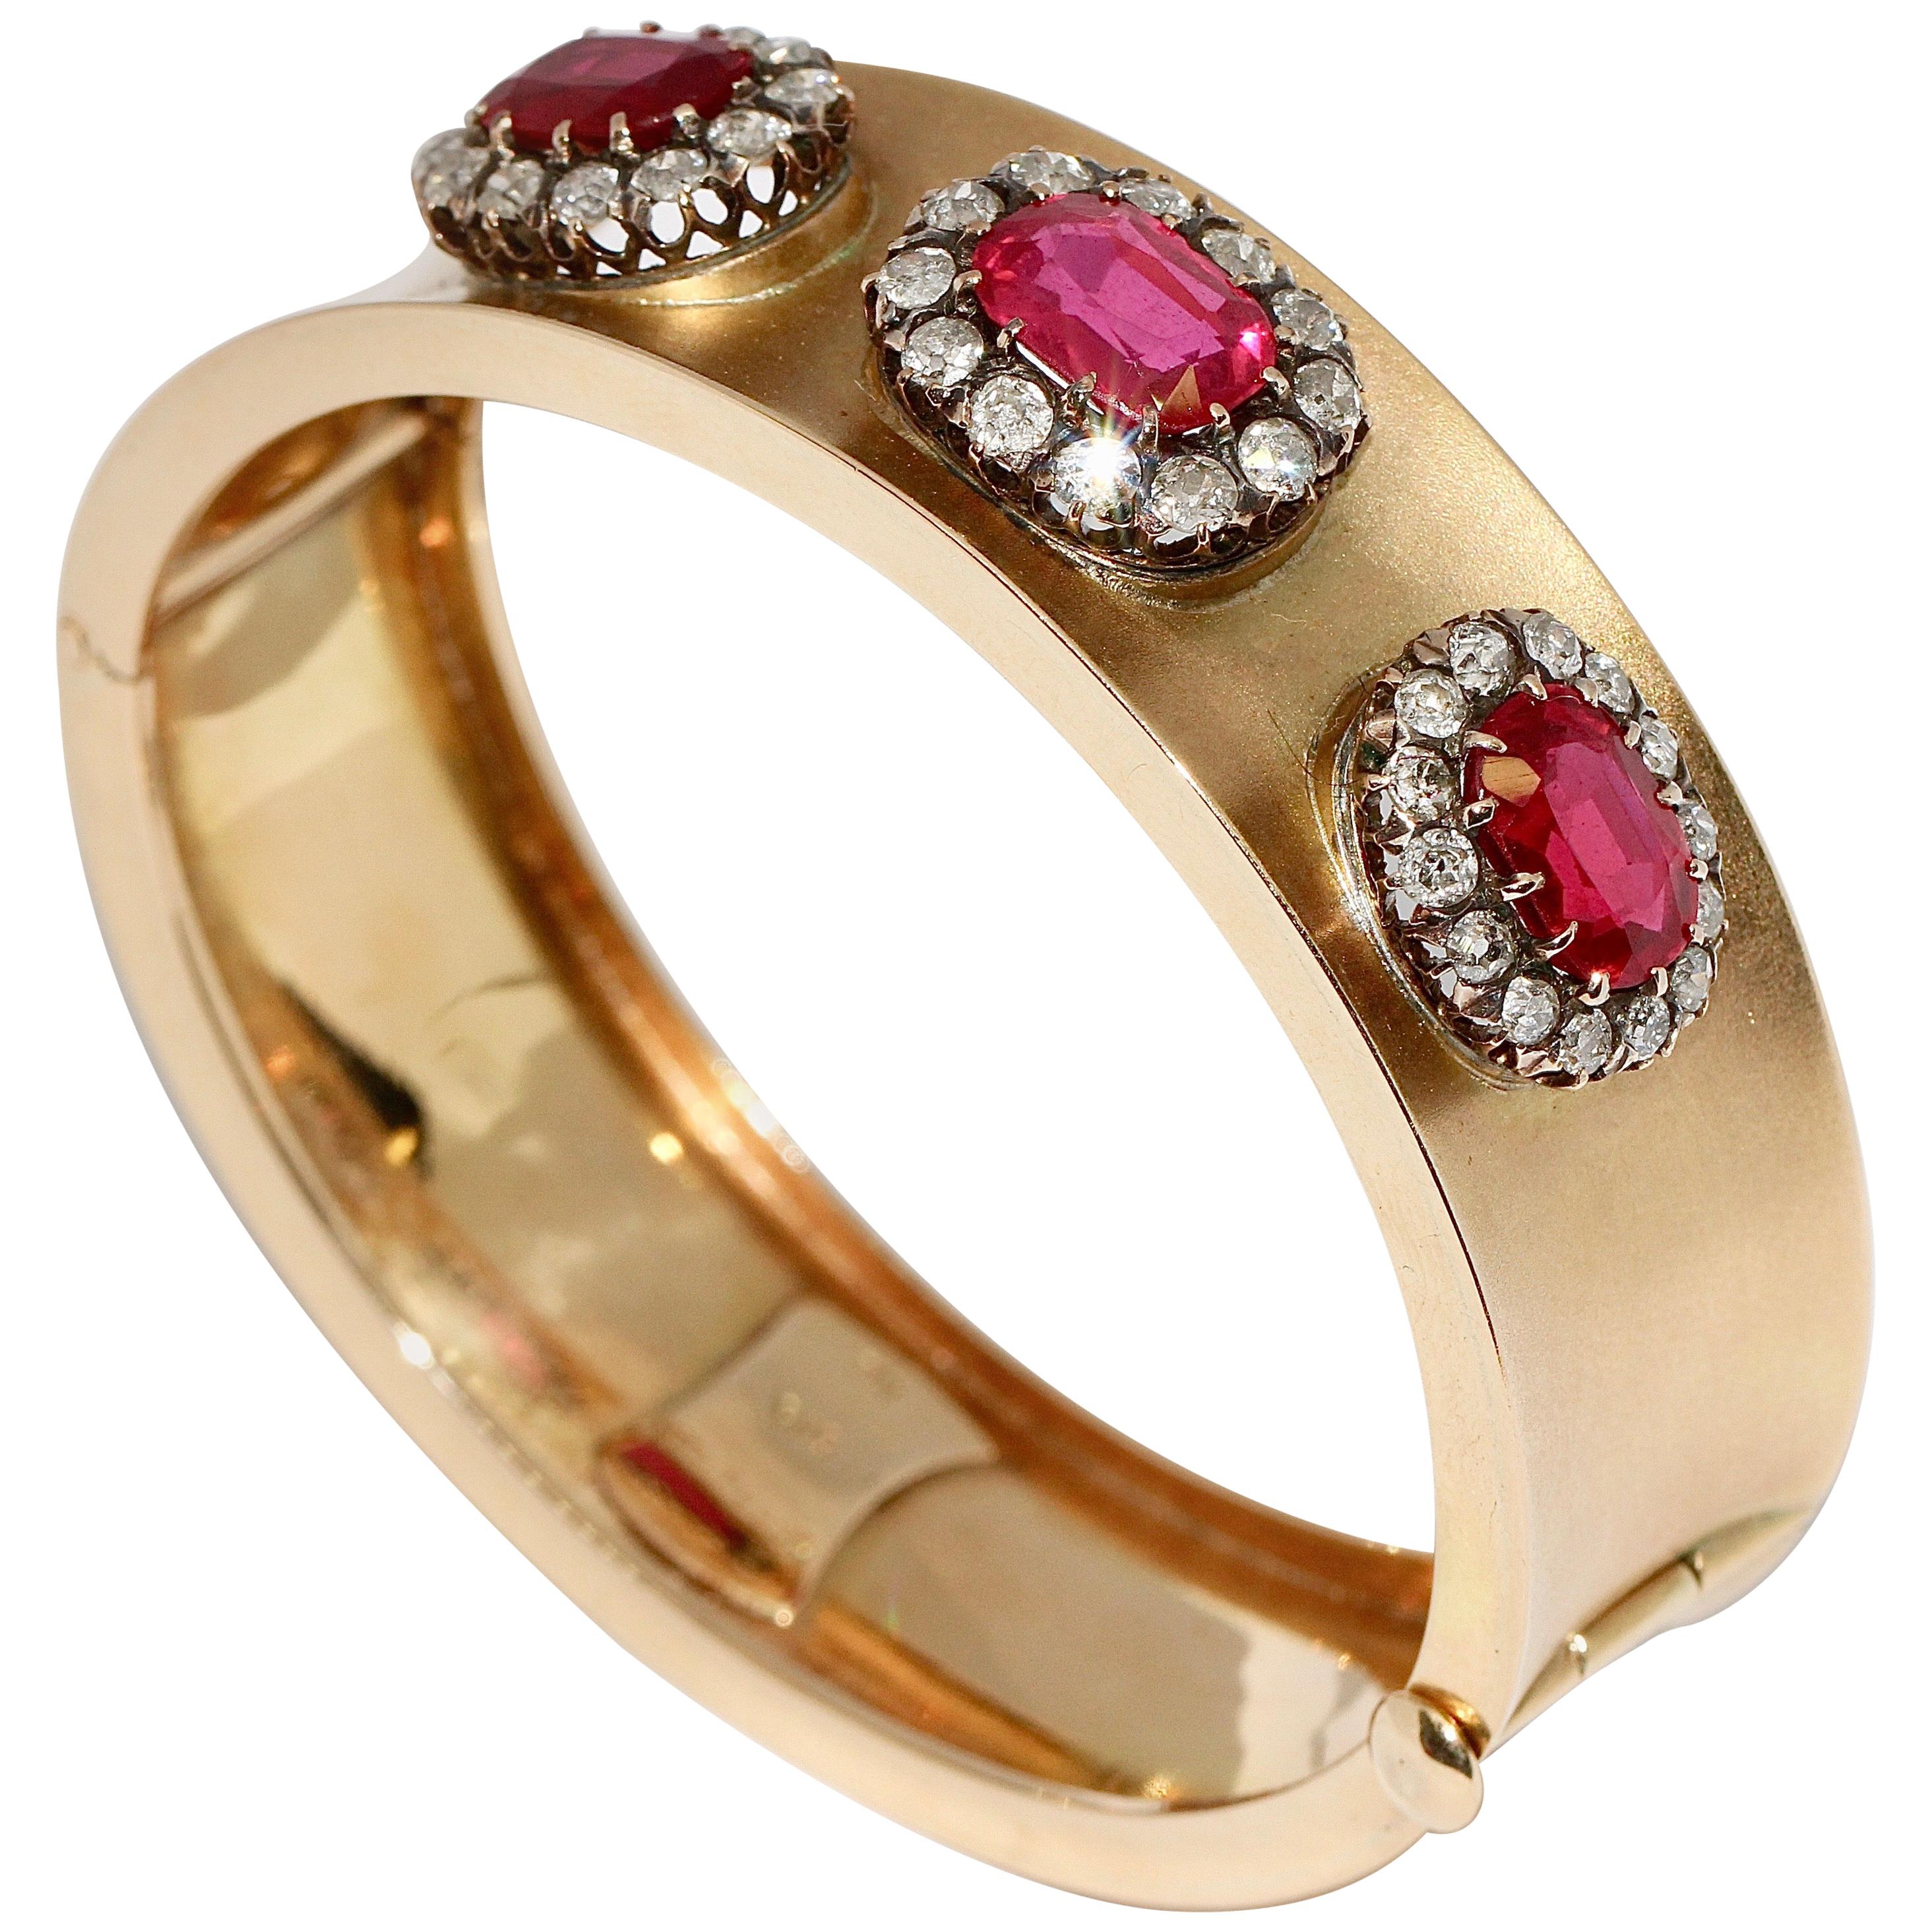 Antique Ladies Bangle, Bracelet, with Big Rubies and Diamonds, 14 Karat Gold